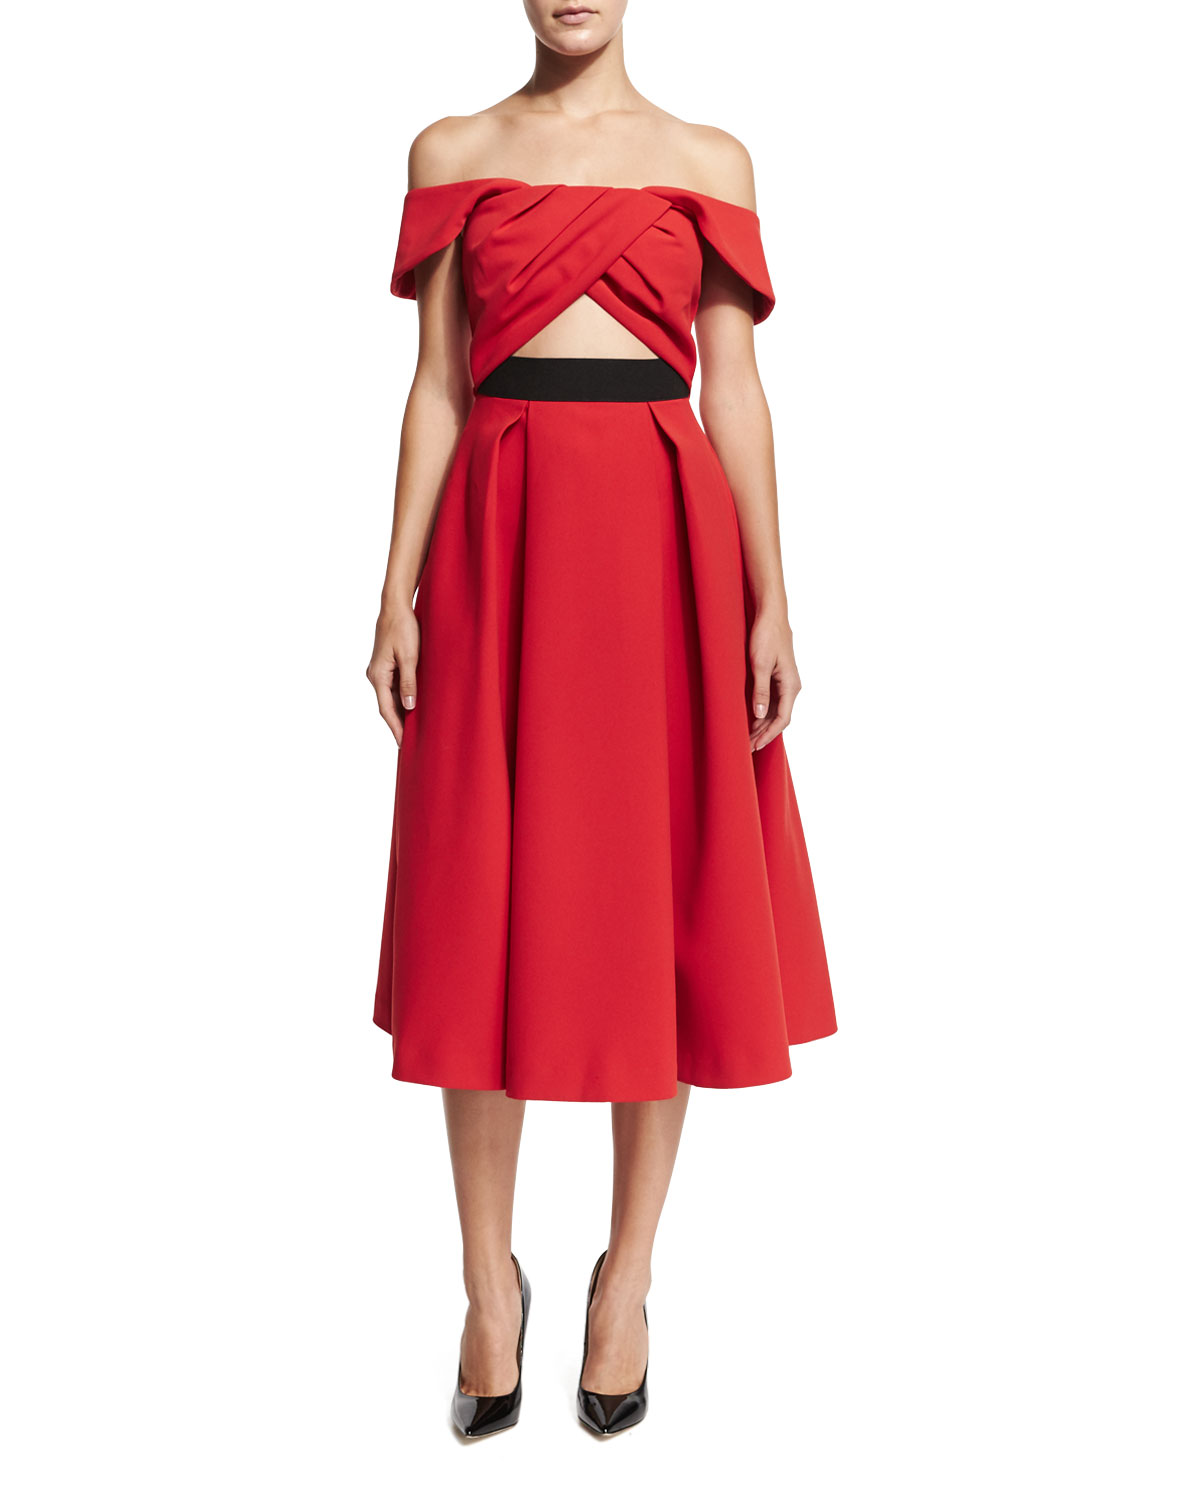 Ayelette Cutout Double-Crepe Dress, Red, Size: 0 - Self Portrait | Neiman Marcus